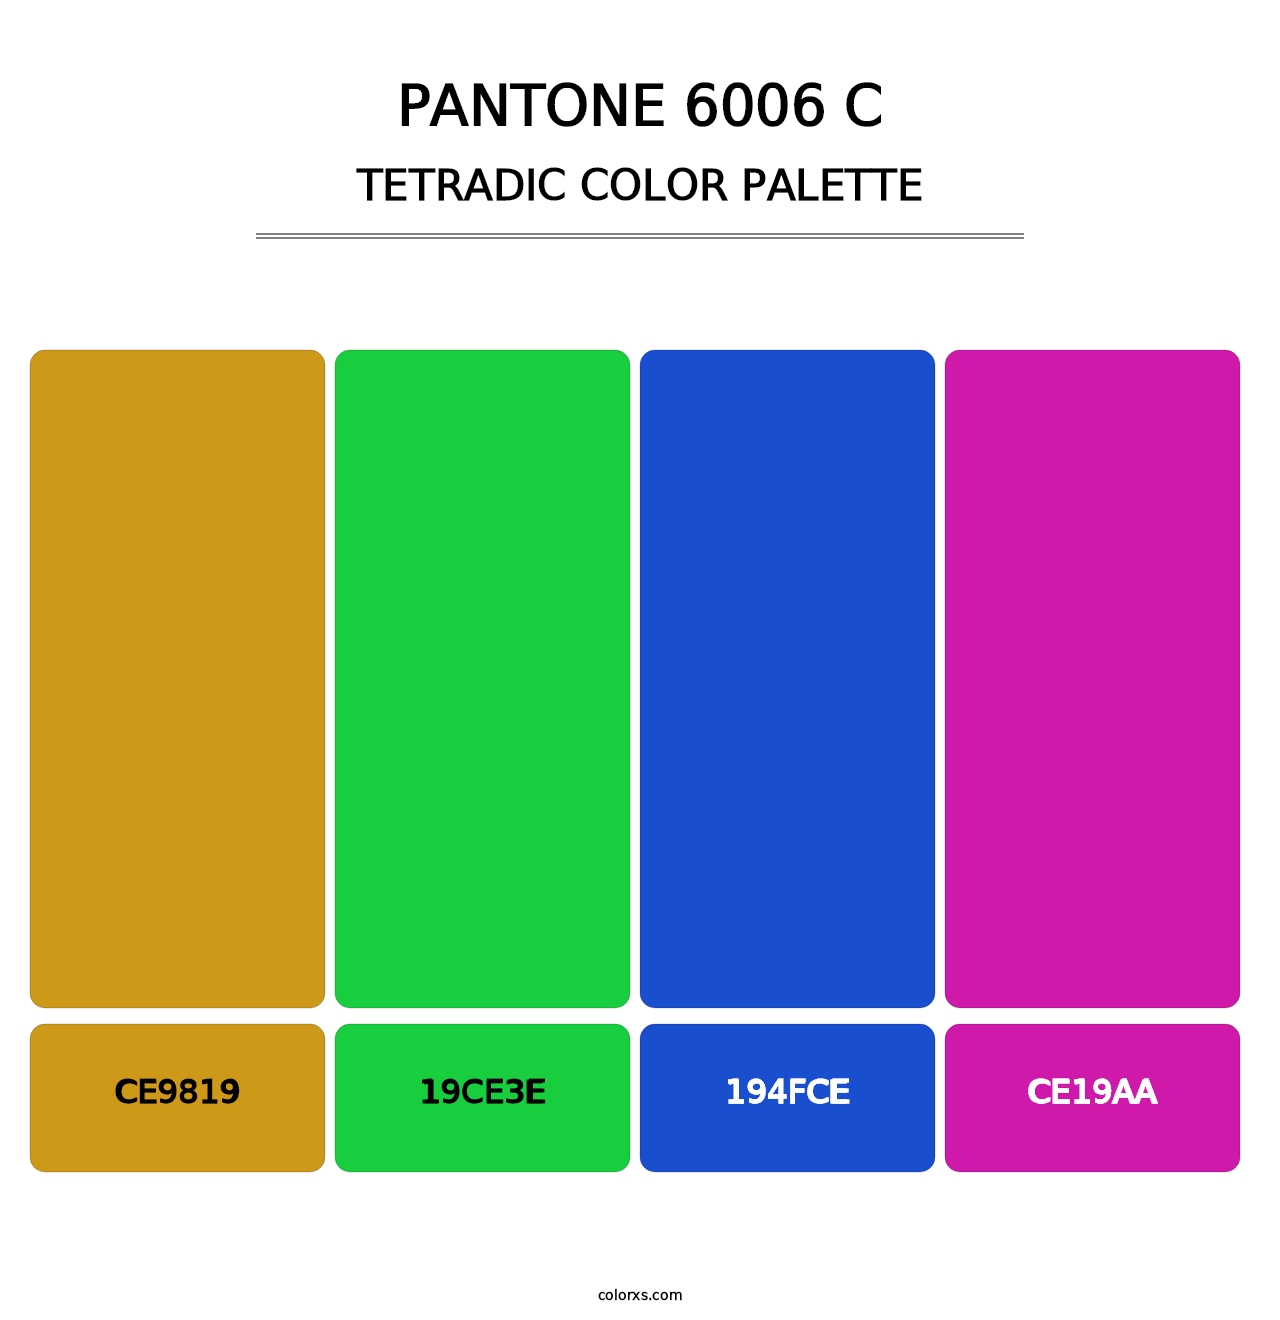 PANTONE 6006 C - Tetradic Color Palette